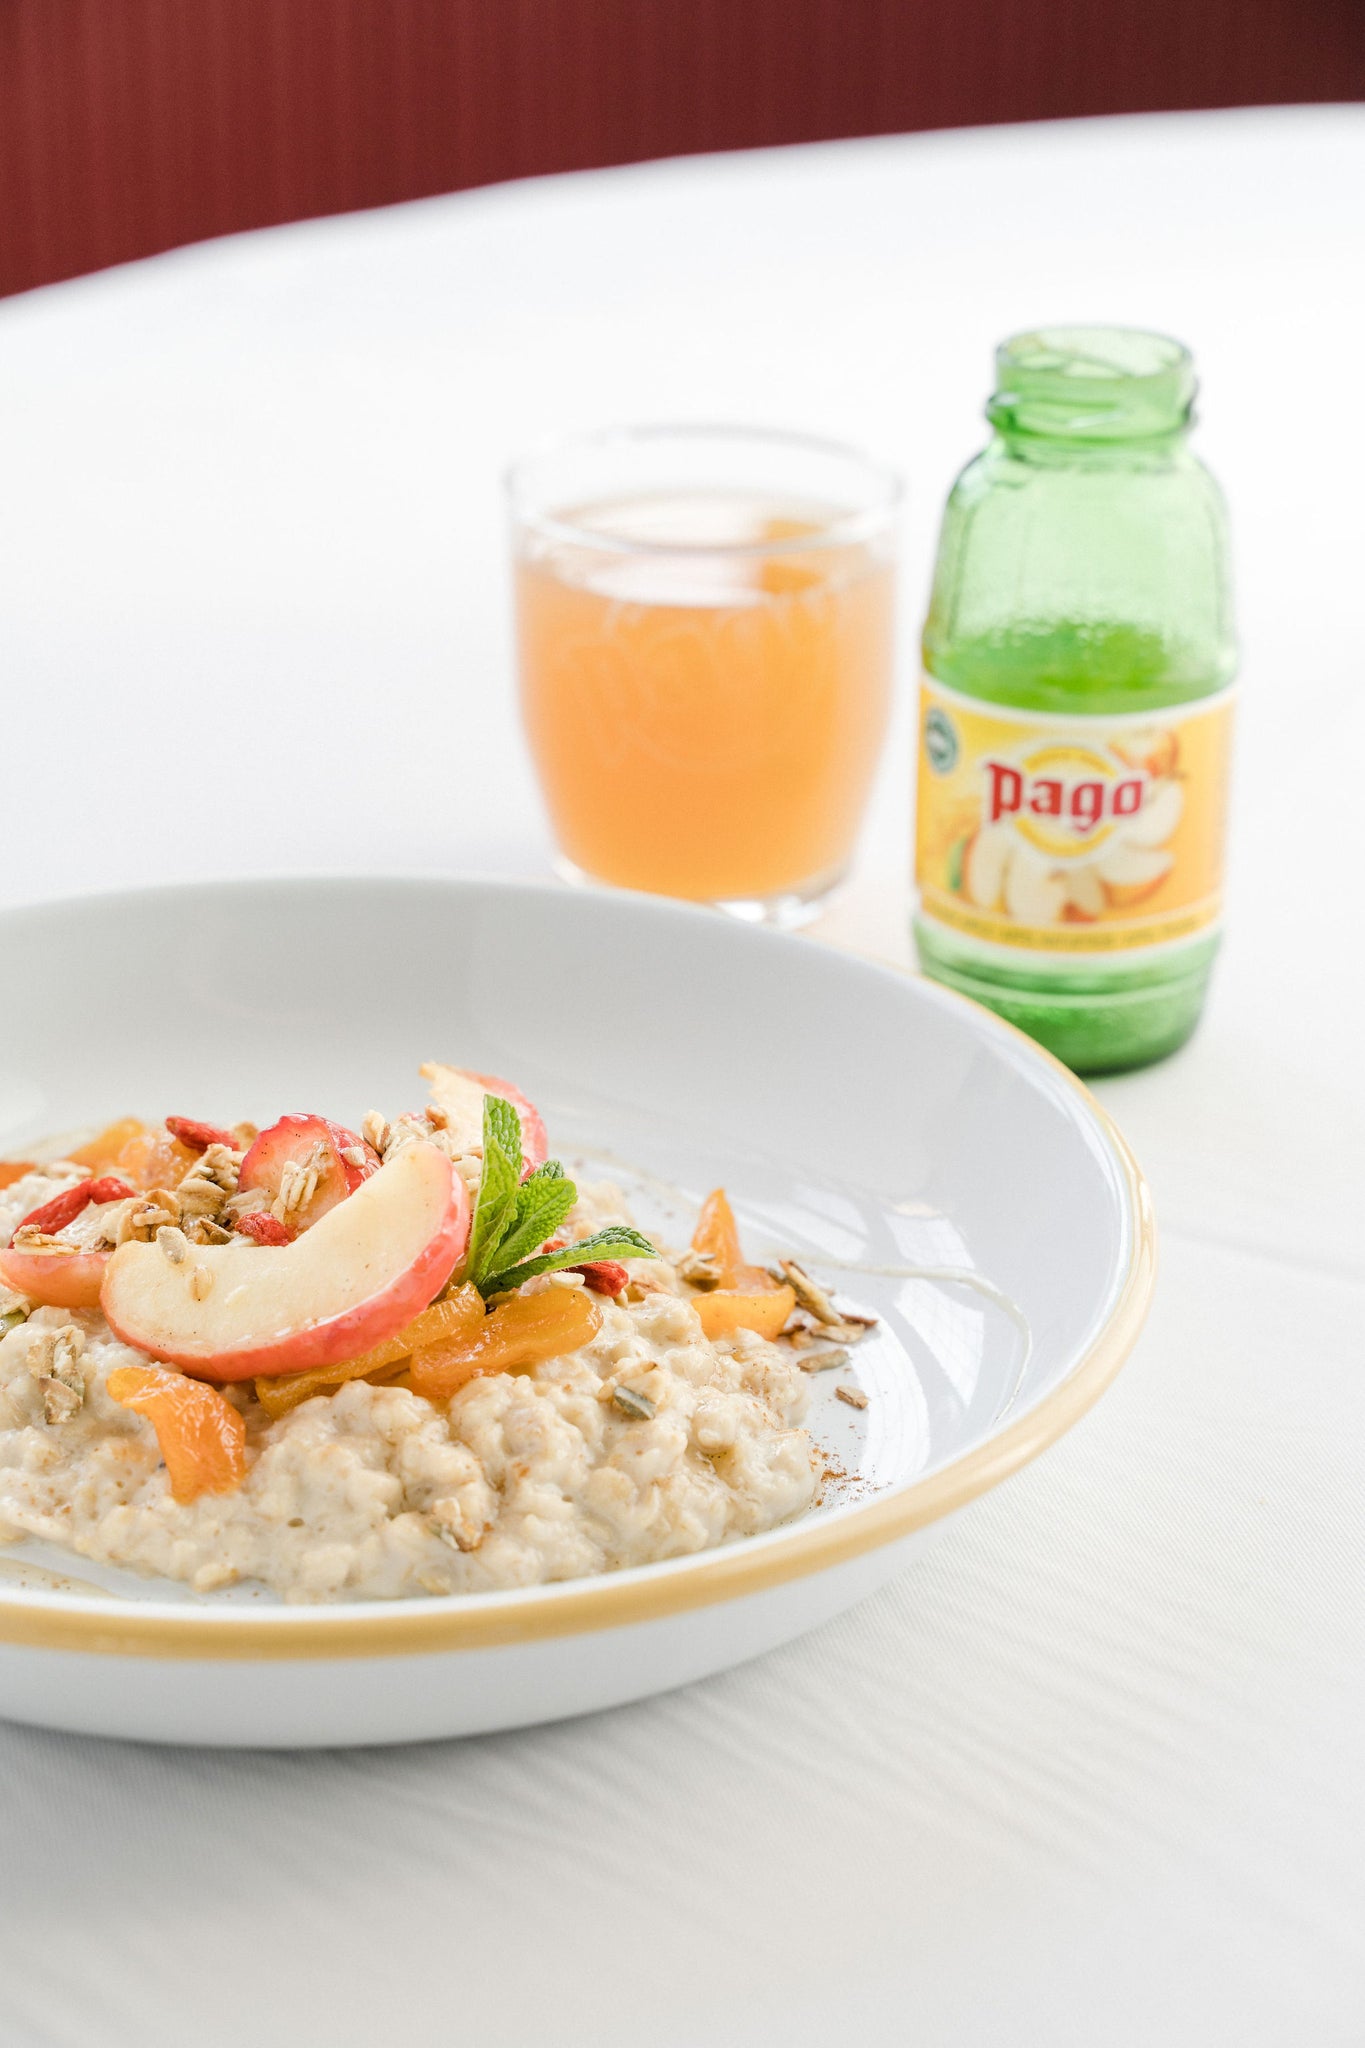 Pago Cloudy Apple Juice - Vegan Friendly & Gluten Free (Single Bottle) - Pago Premium Fruit Juice Store